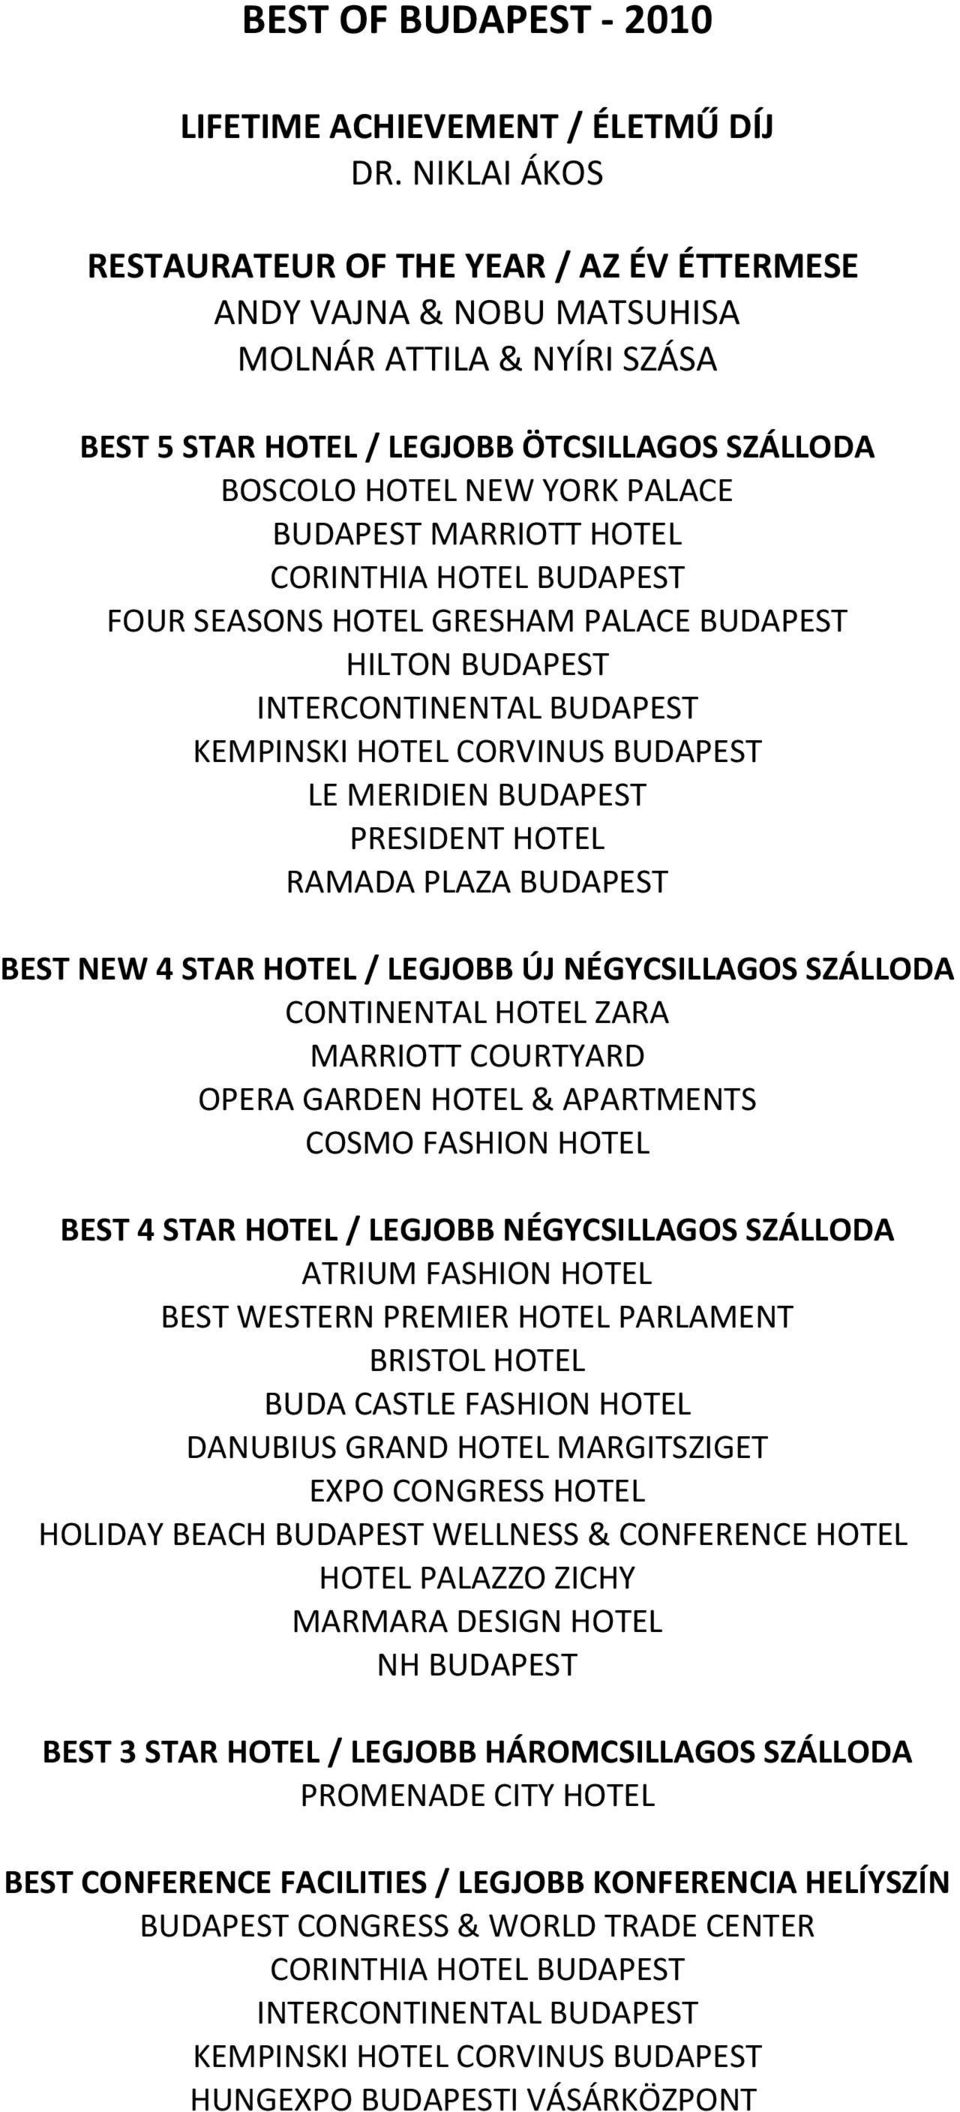 HOTEL BUDAPEST FOUR SEASONS HOTEL GRESHAM PALACE BUDAPEST HILTON BUDAPEST KEMPINSKI HOTEL CORVINUS BUDAPEST LE MERIDIEN BUDAPEST PRESIDENT HOTEL RAMADA PLAZA BUDAPEST BEST NEW 4 STAR HOTEL / LEGJOBB